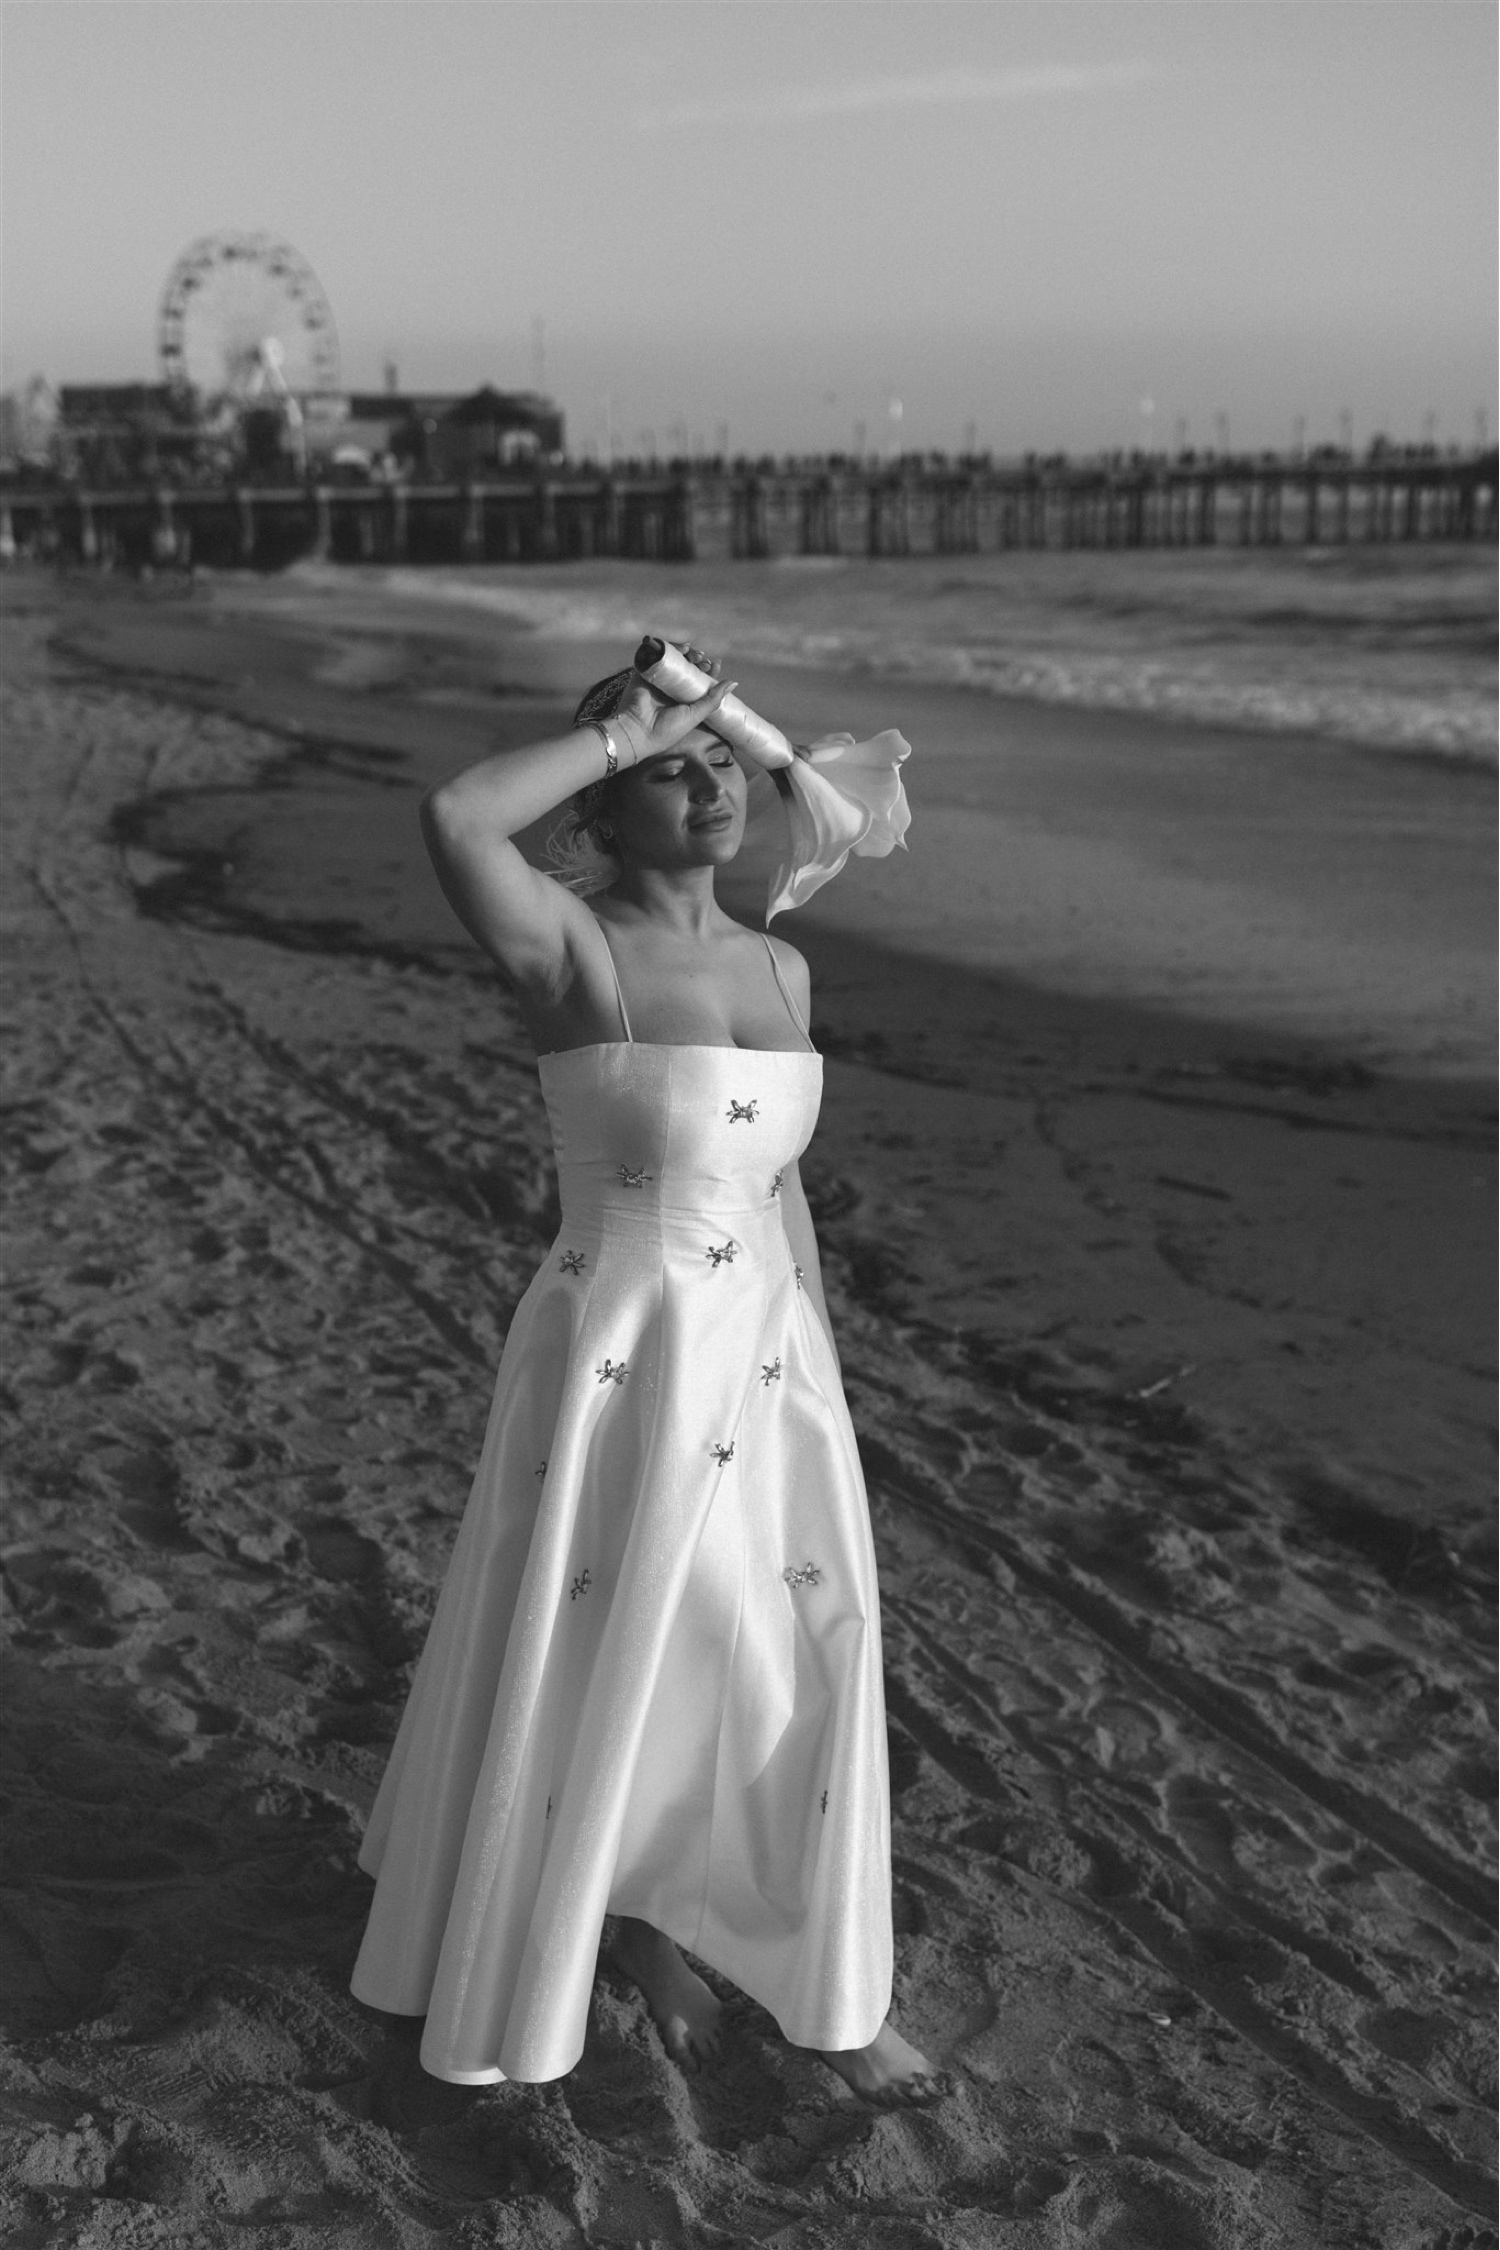 Santa Monica Beach elopement with Hanna Walkowaik Photography